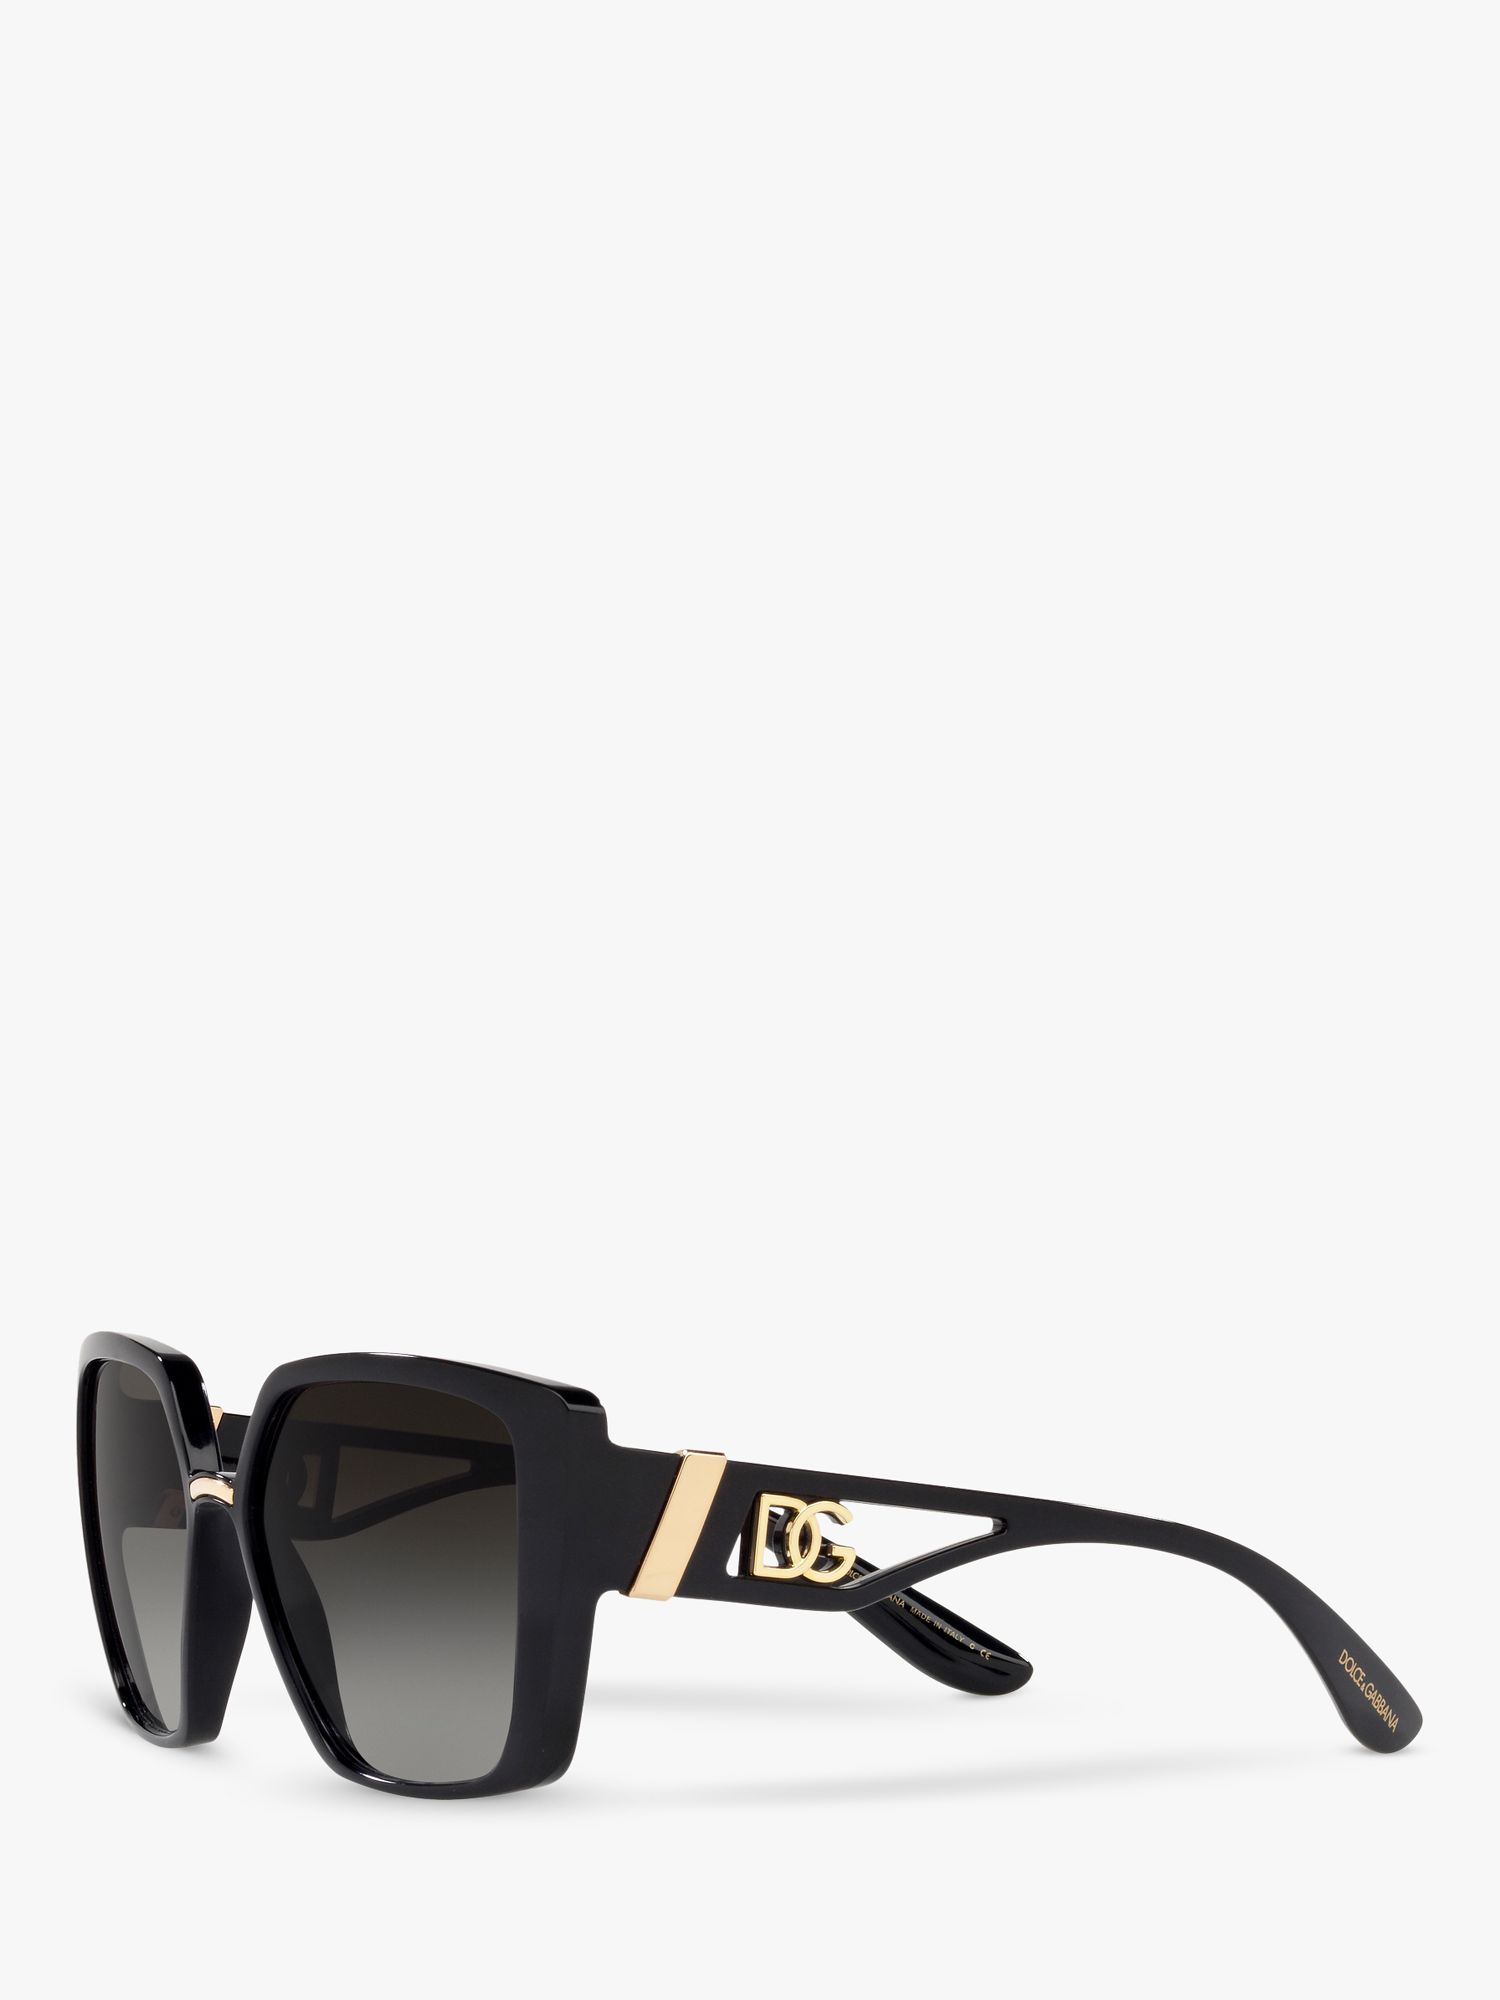 Dolce & Gabbana DG6156 Women's Butterfly Sunglasses, Black/Grey Gradient at  John Lewis & Partners